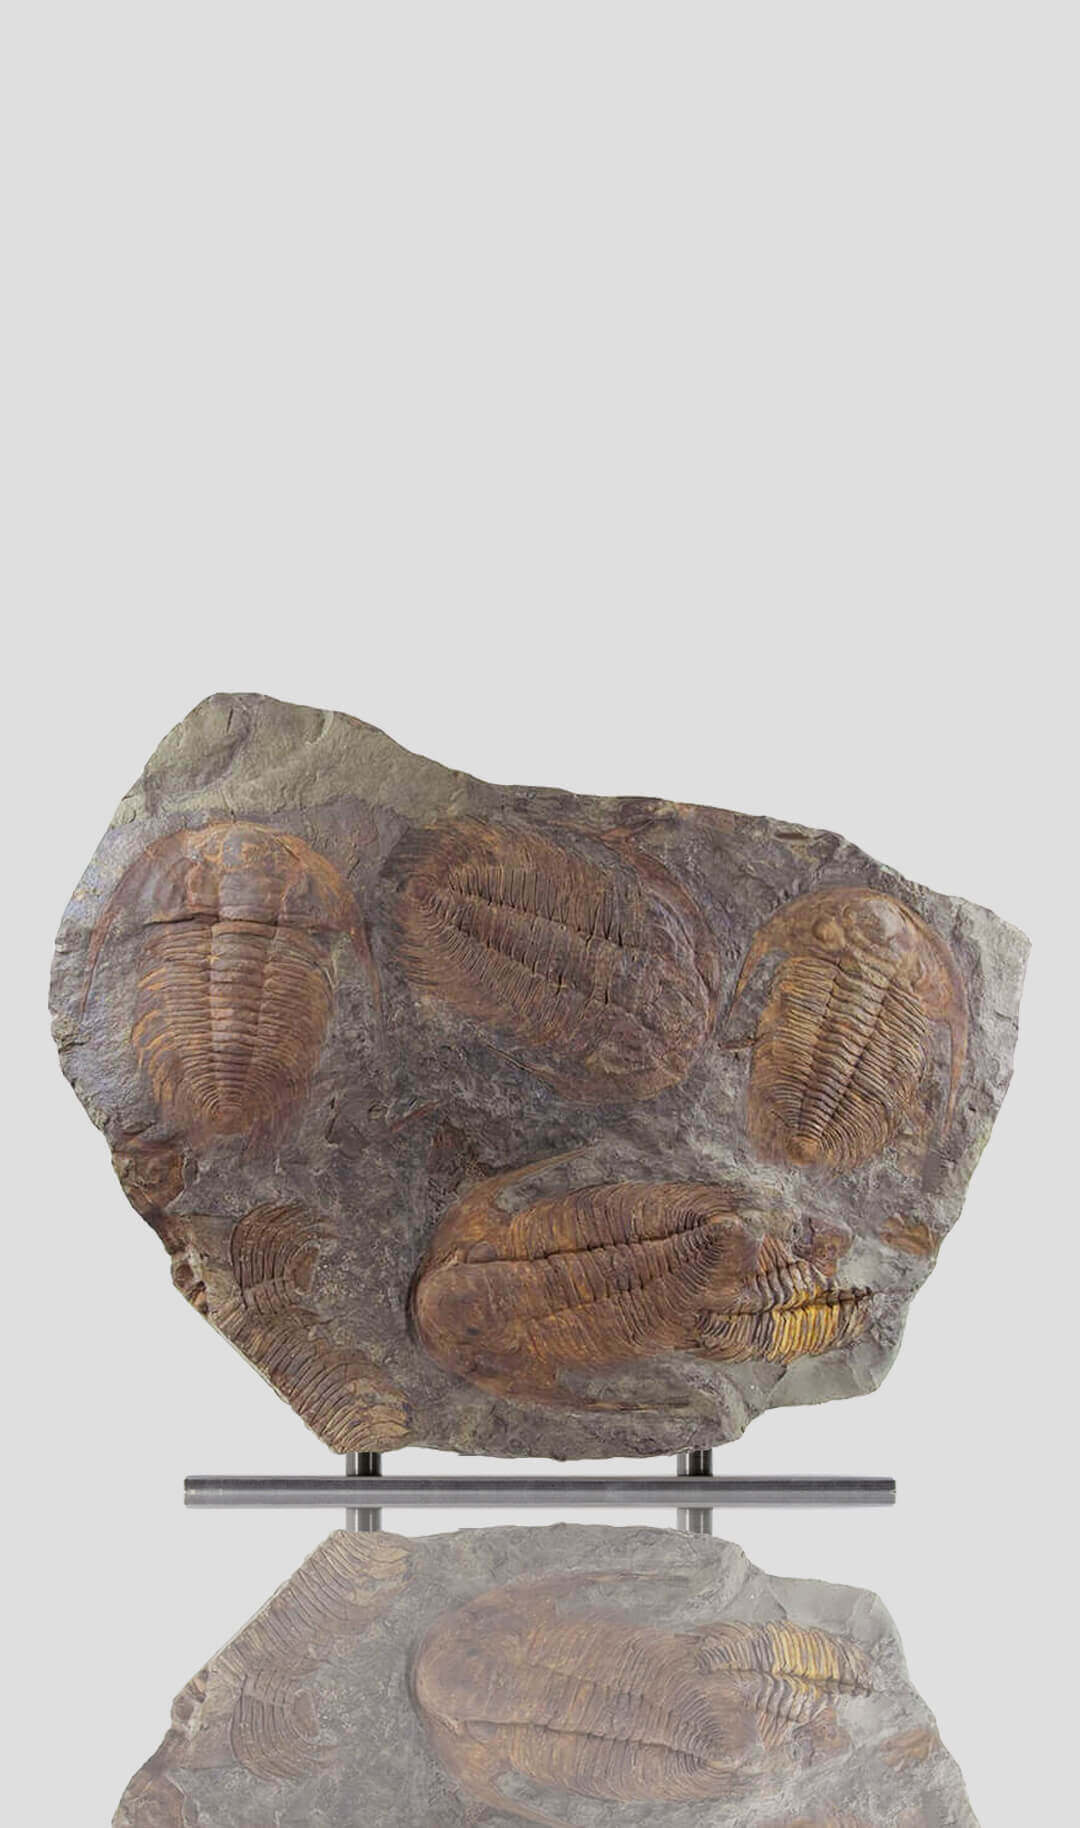 large paradoxides trilobite plate for sale 22